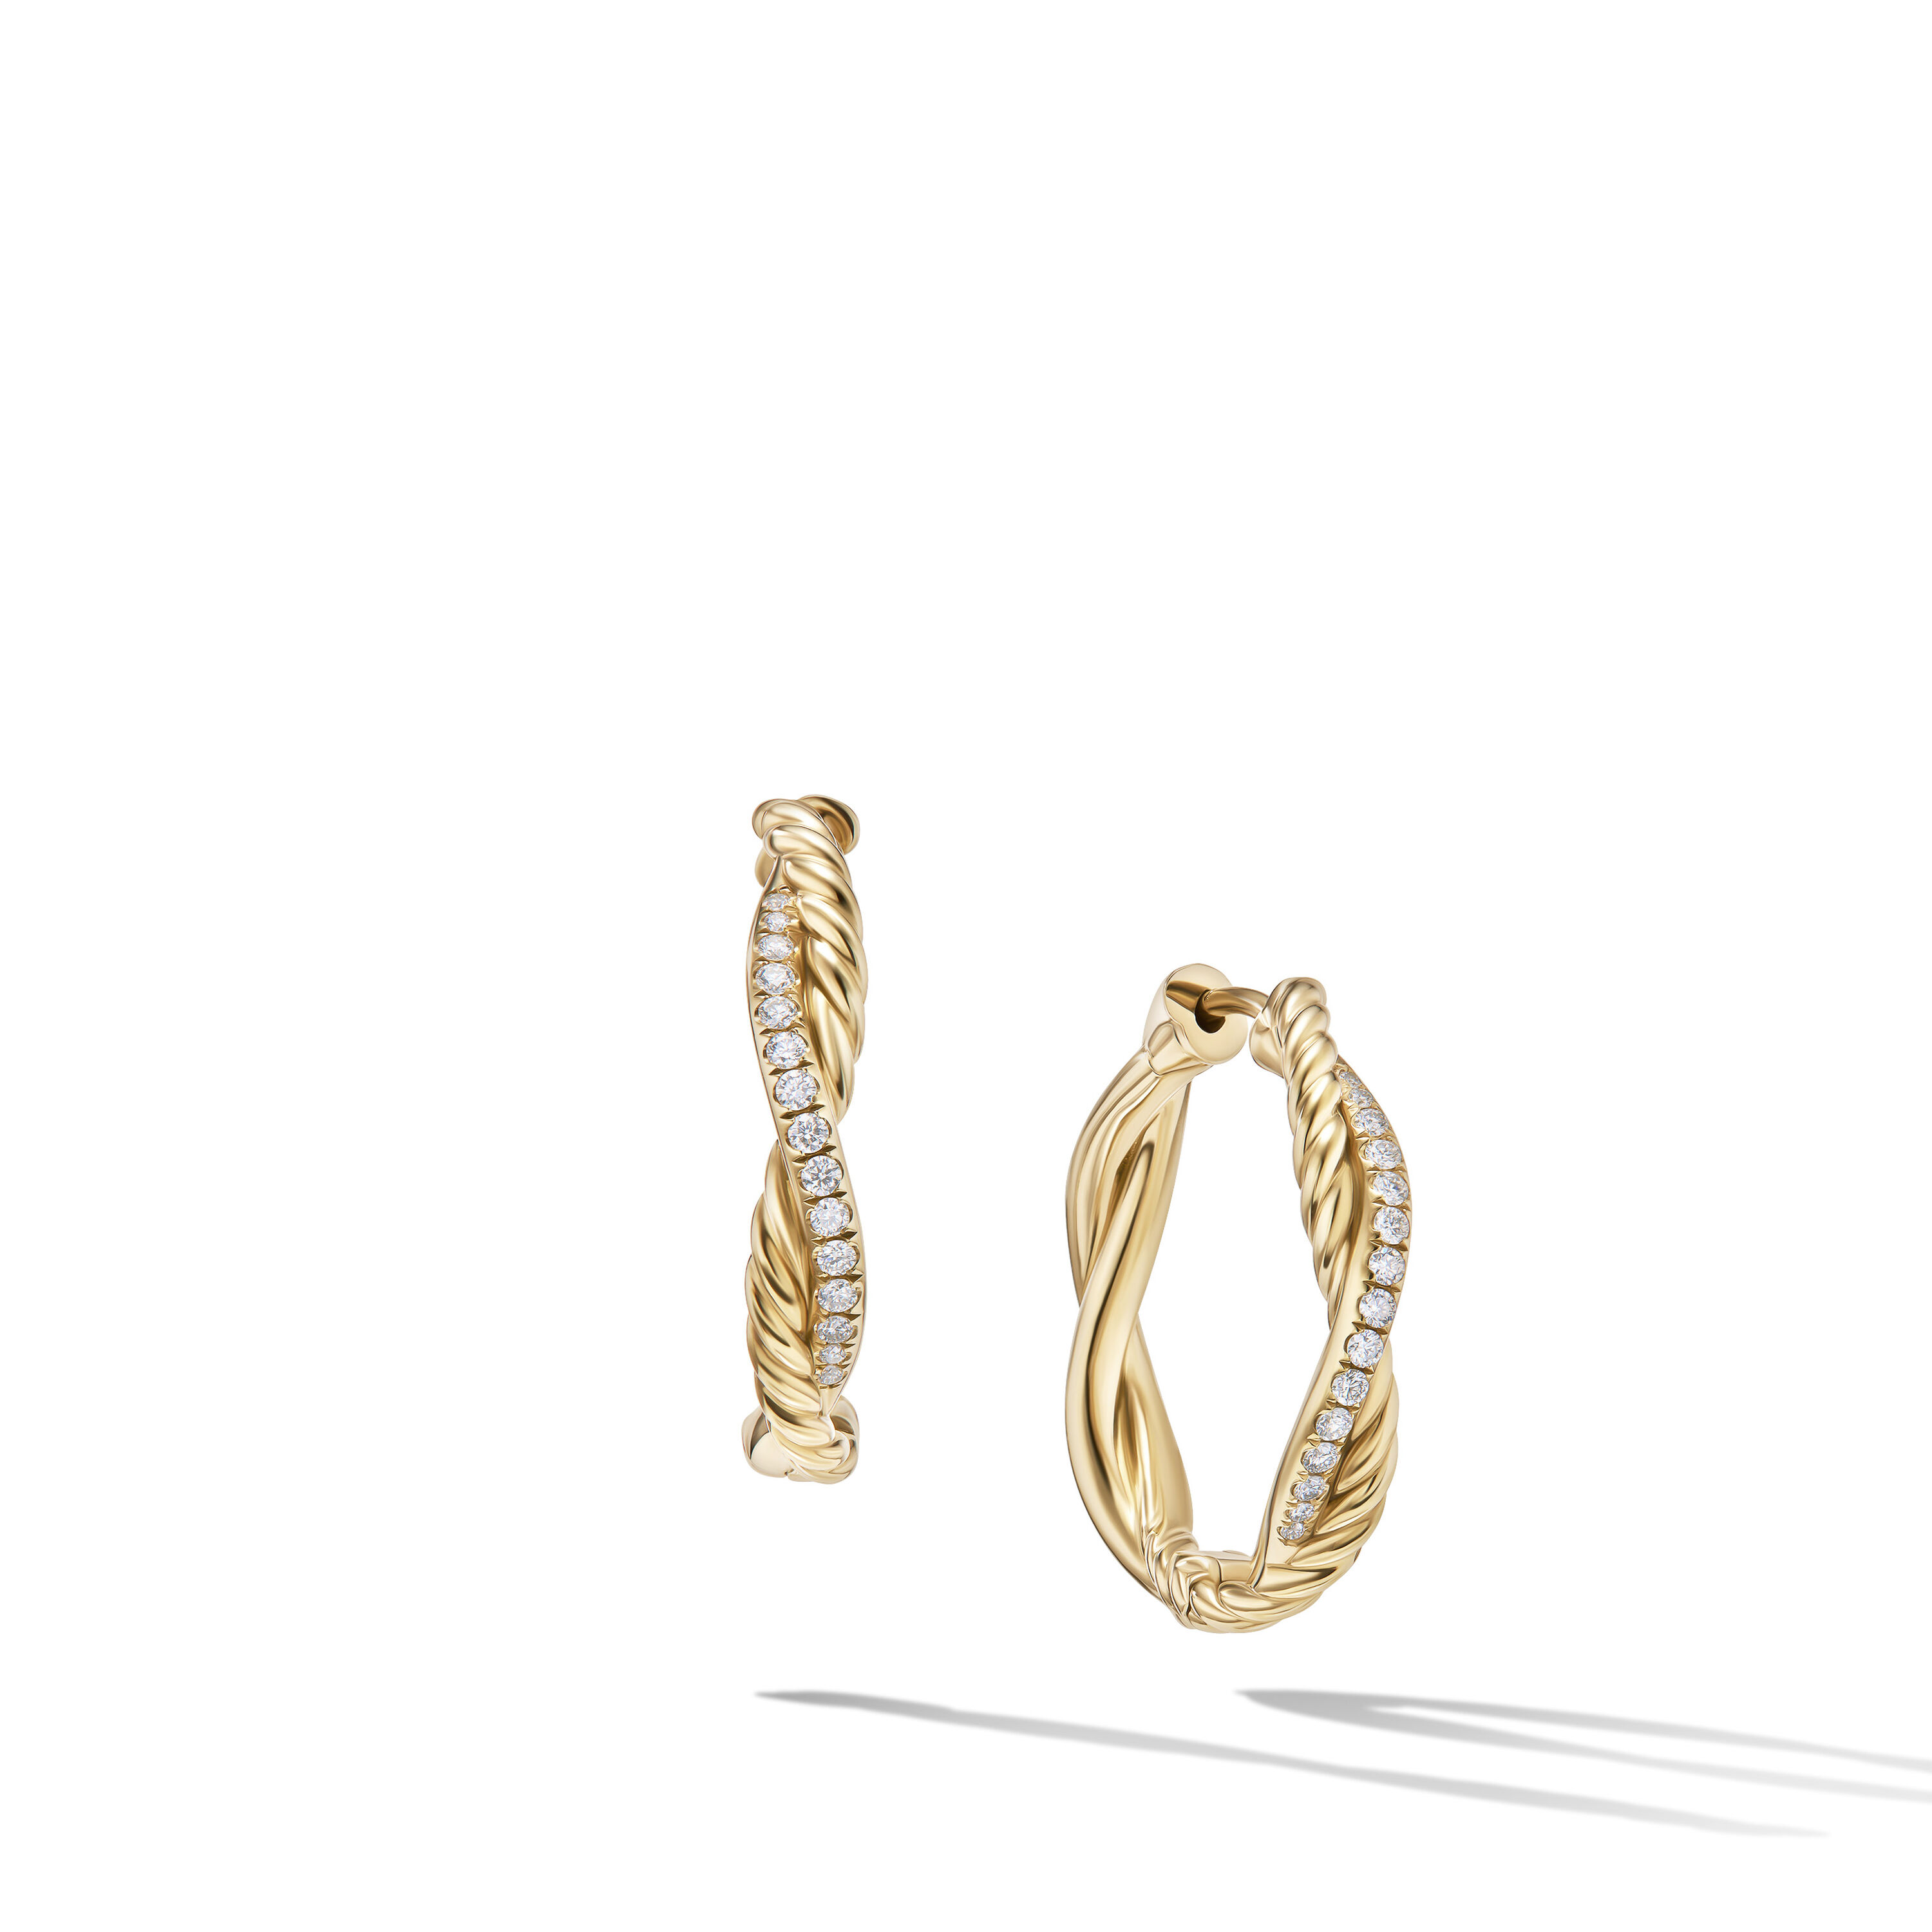 Infinity Hoop Earrings in 18K Yellow Gold with Diamonds, 42mm